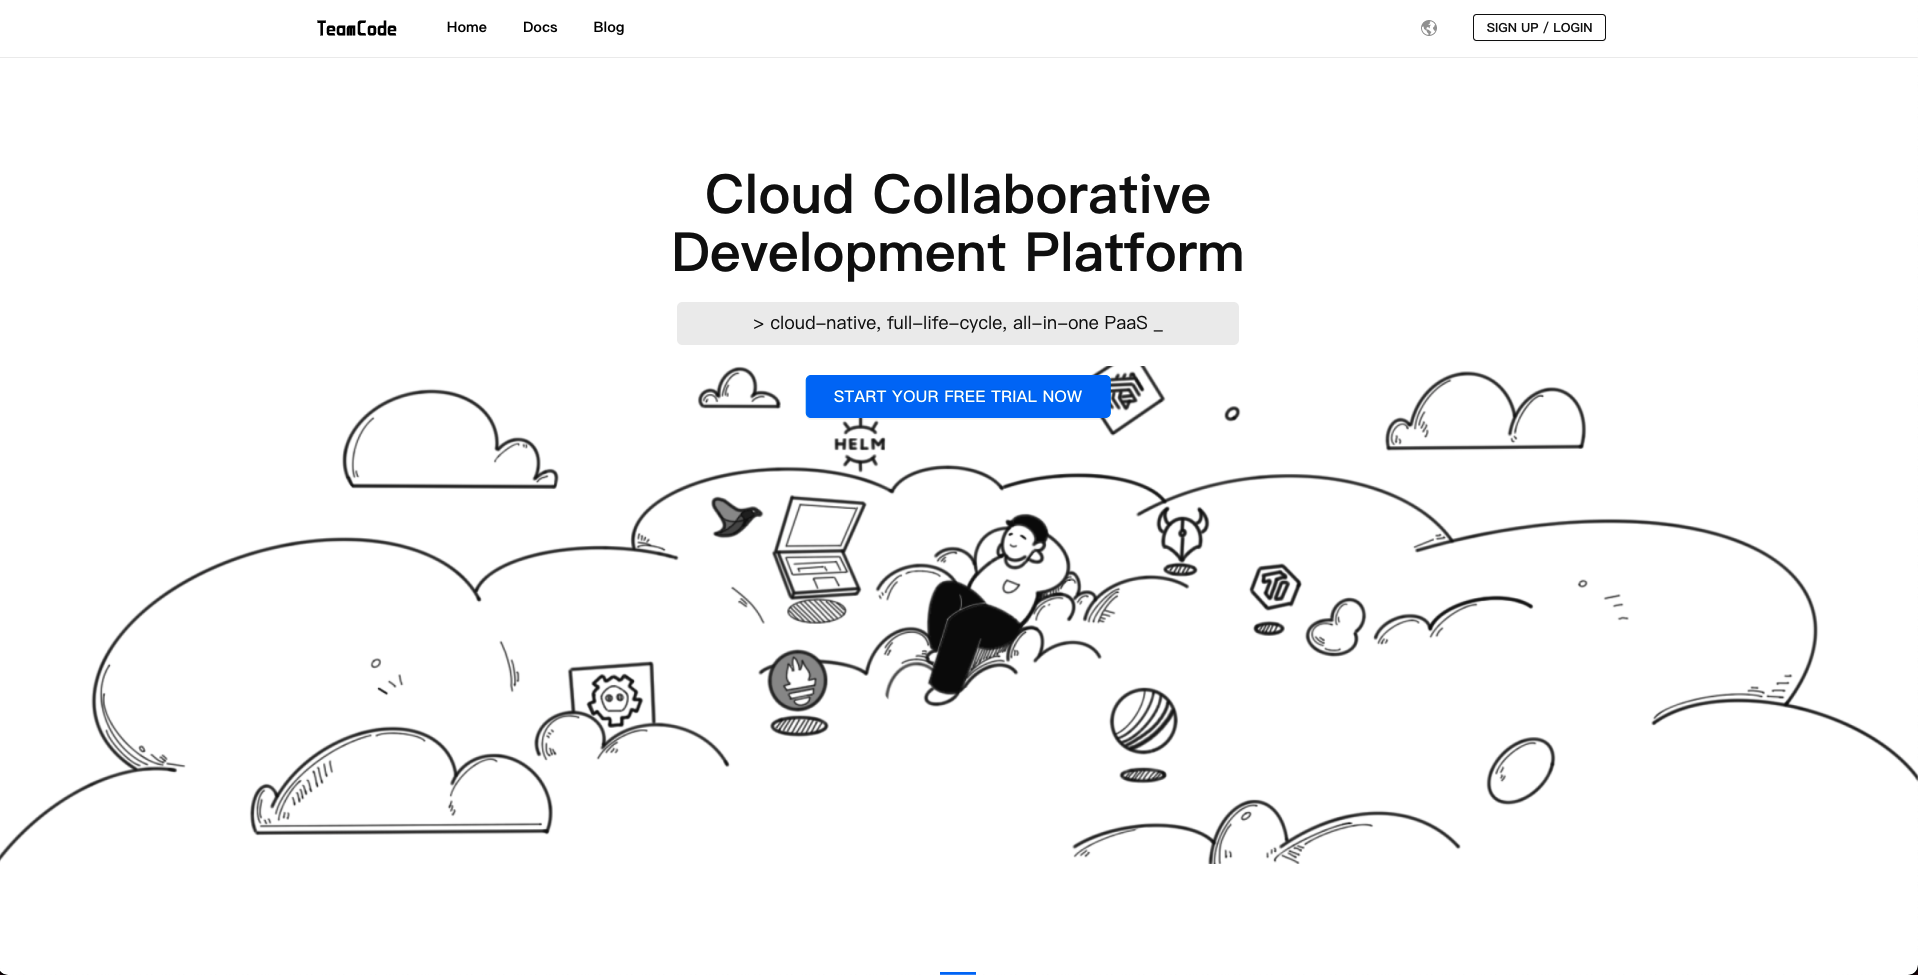 TeamCode Cloud Collaborative Development Platform